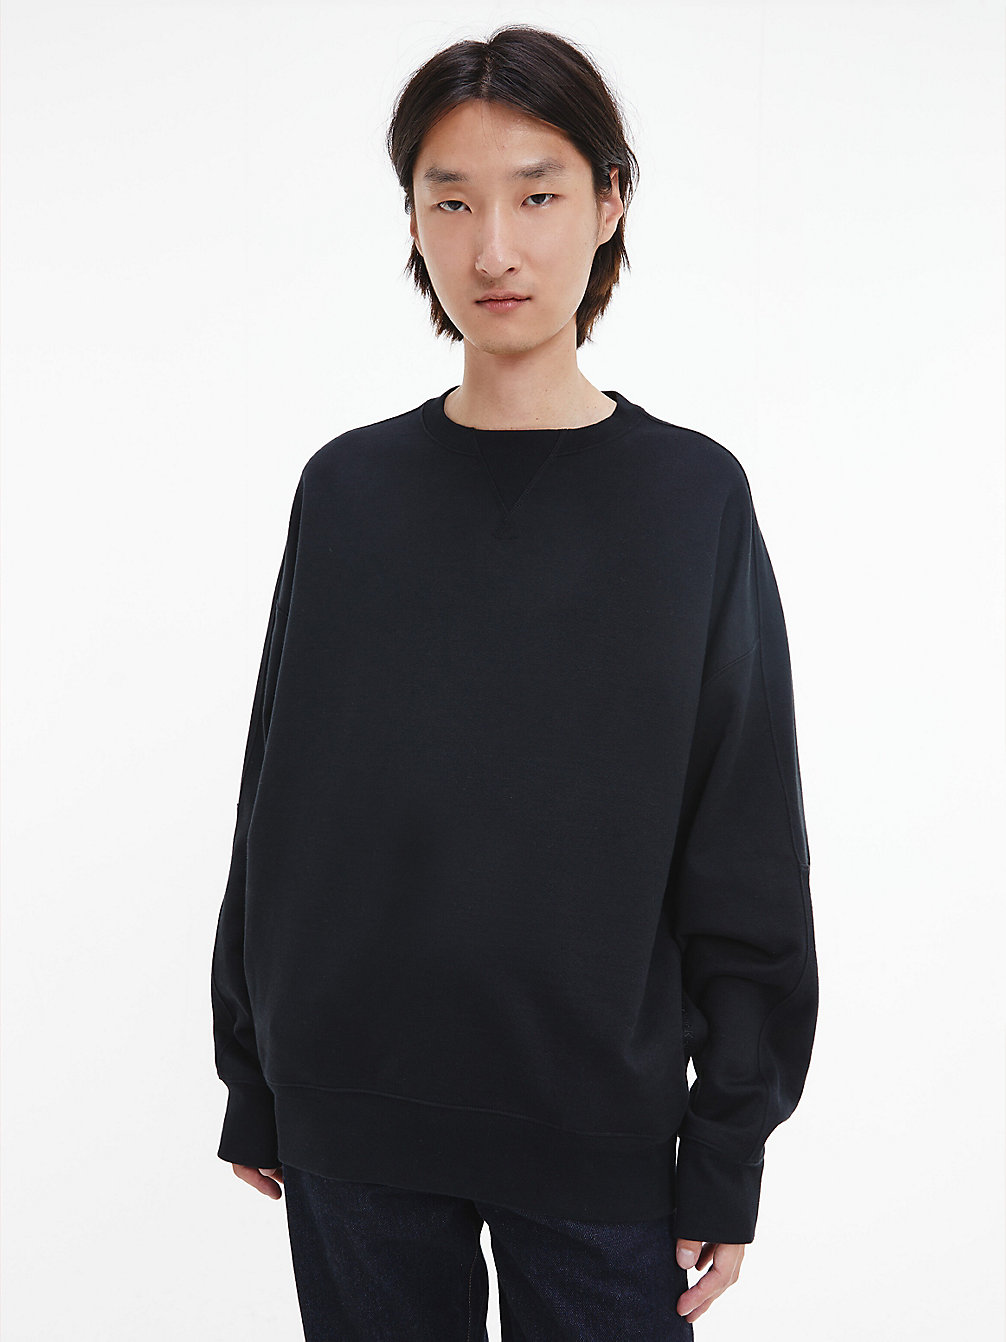 BLACK BEAUTY > Unisex Relaxed Sweatshirt - CK Standards > undefined unisex - Calvin Klein